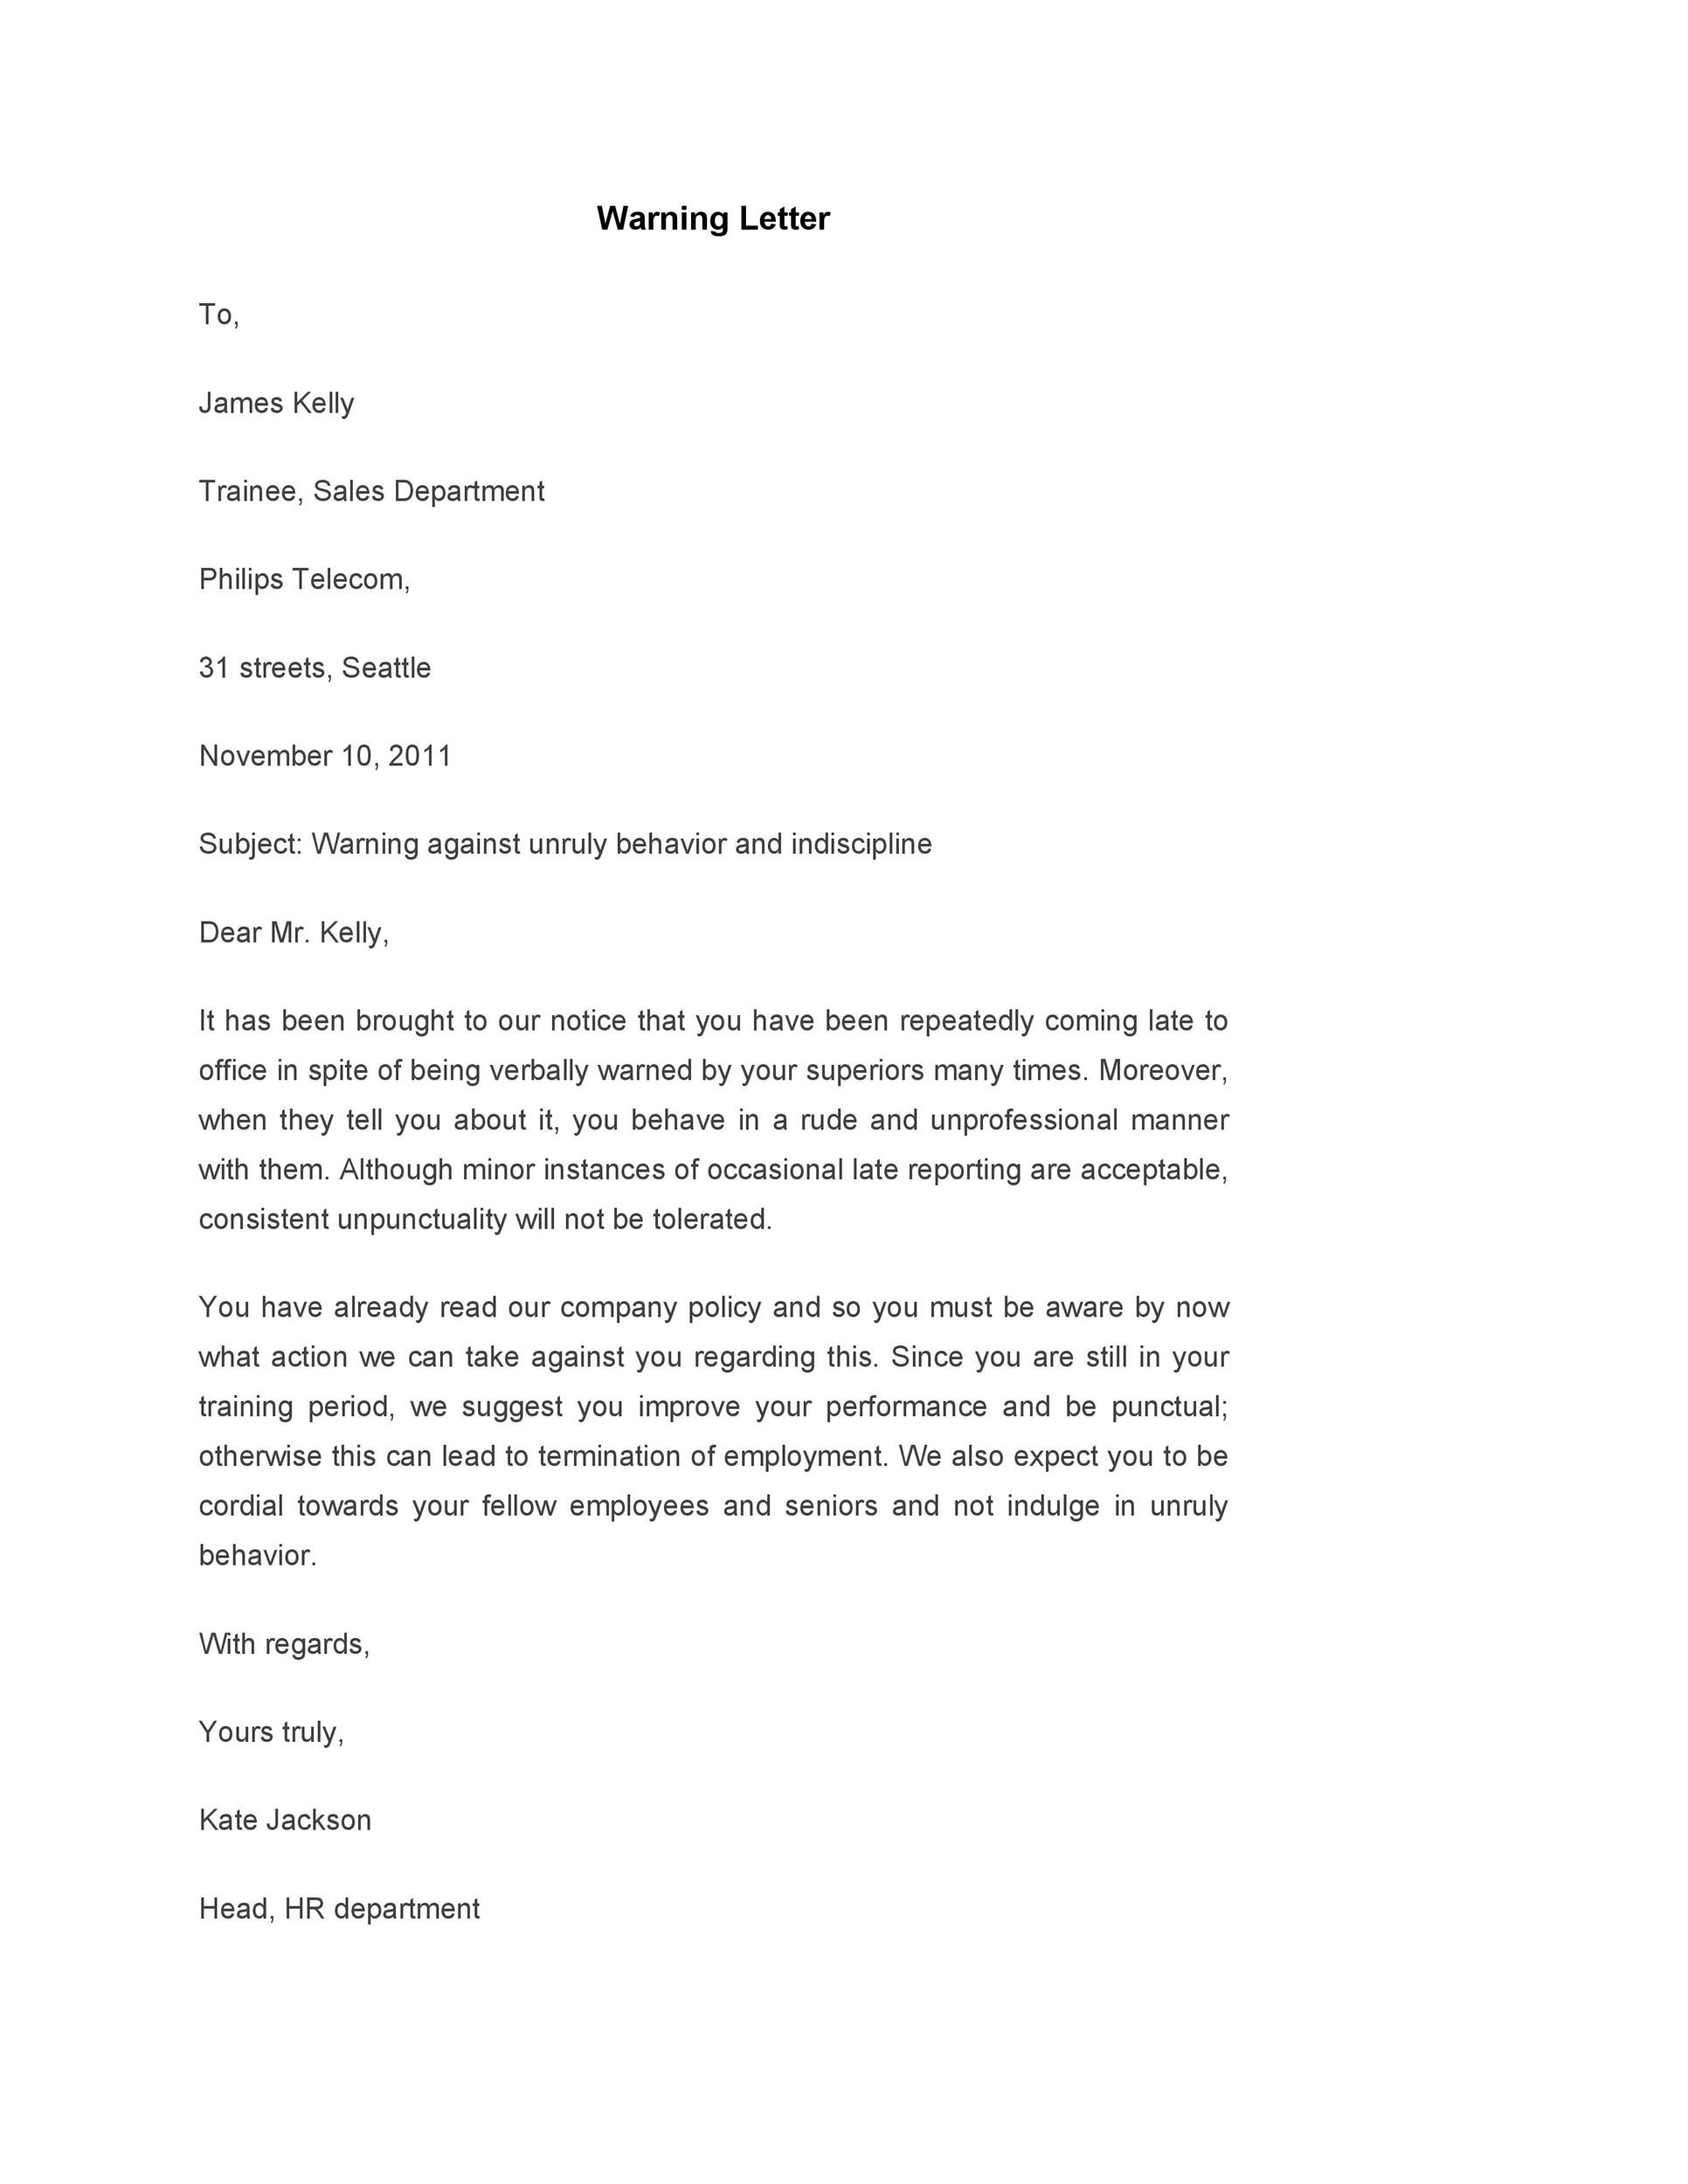 Sample Disciplinary Letter For Unprofessional Behavior from templatelab.com